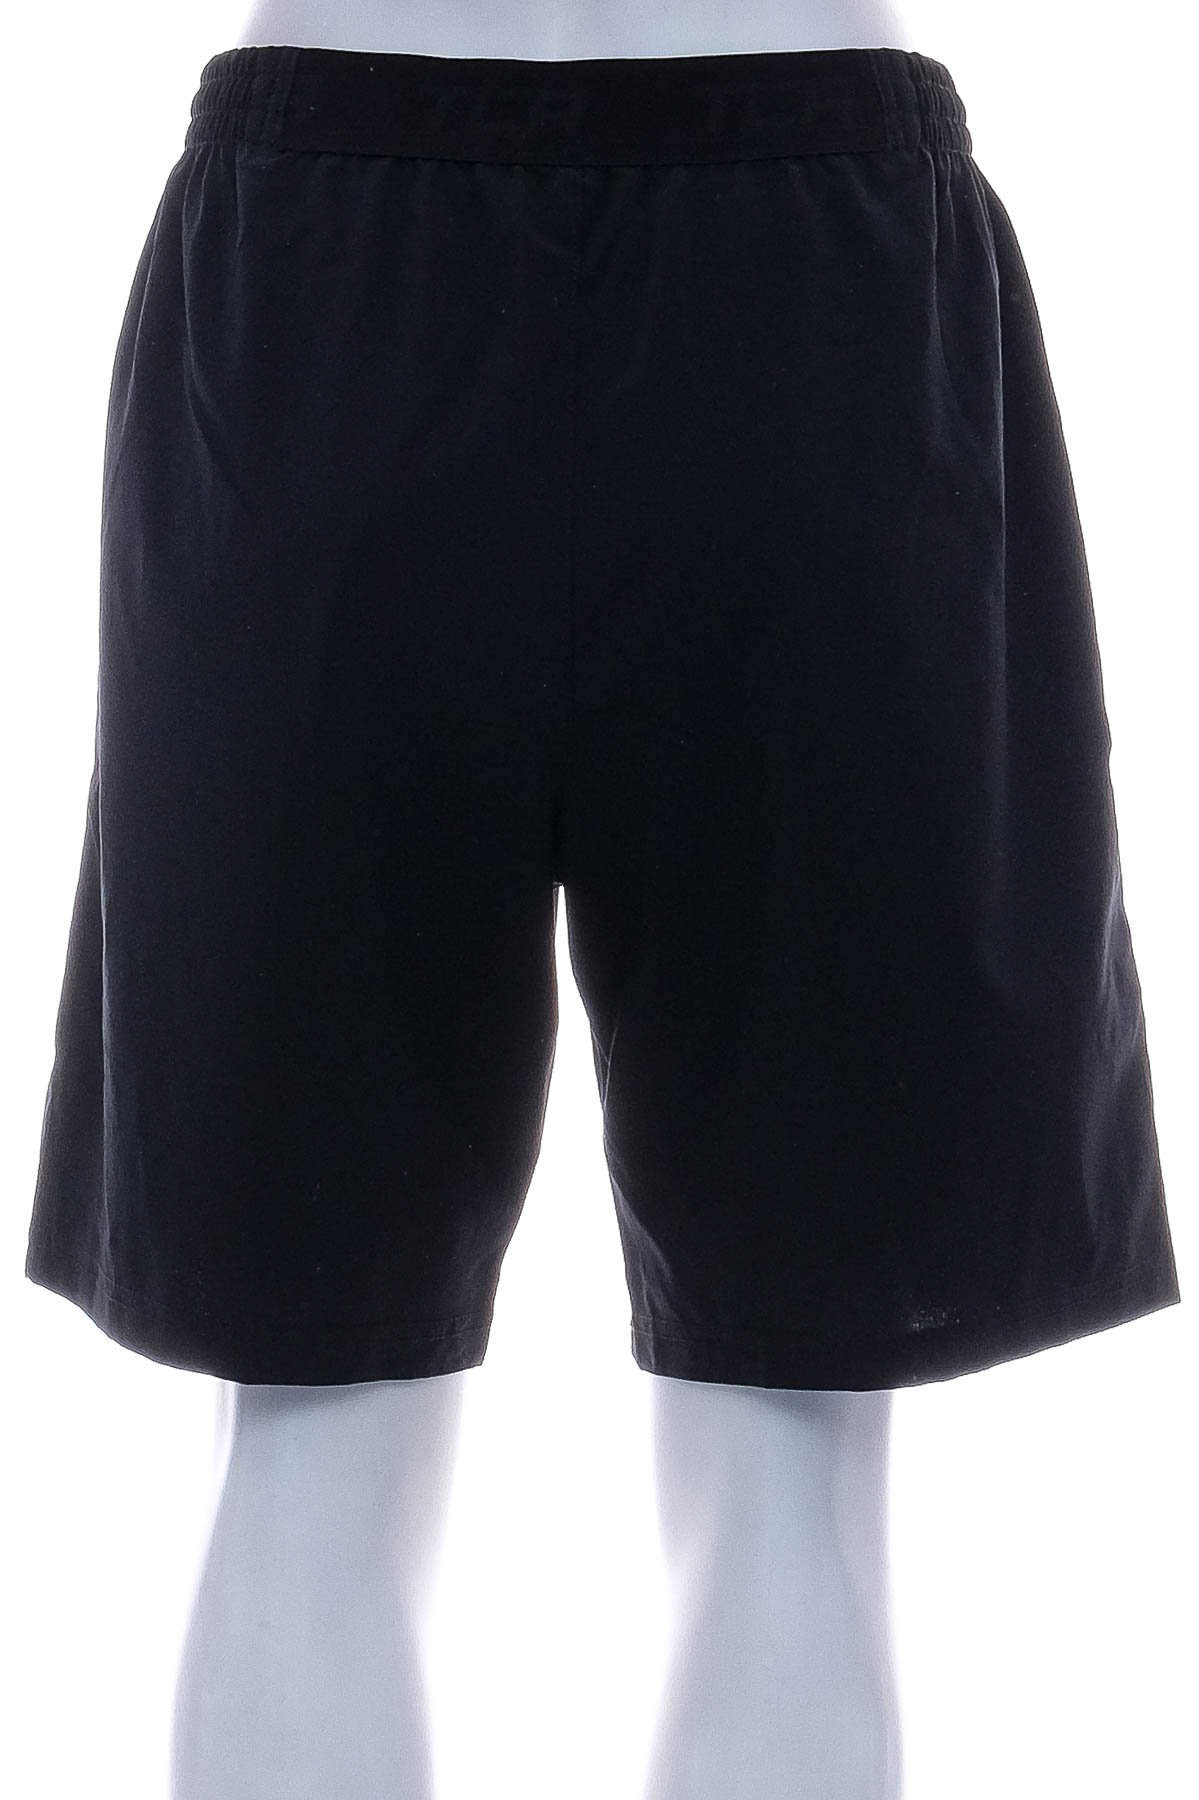 Women's shorts - TCA - 1